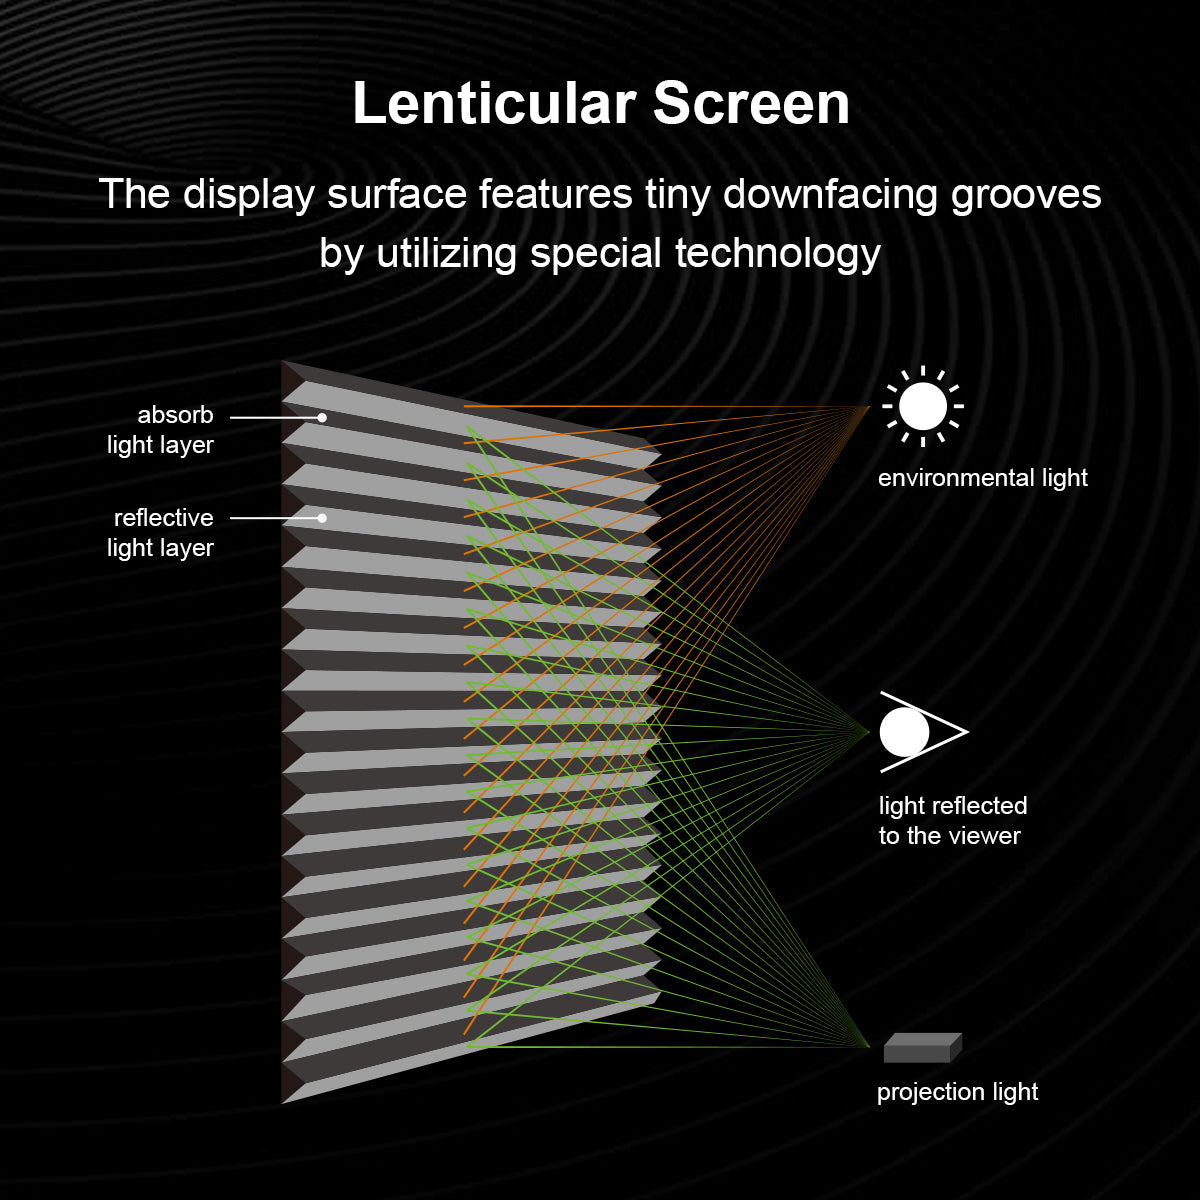 Winways UST Throw ALR 120'' Electric Lenticular Ceiling Tab-Tension Screen